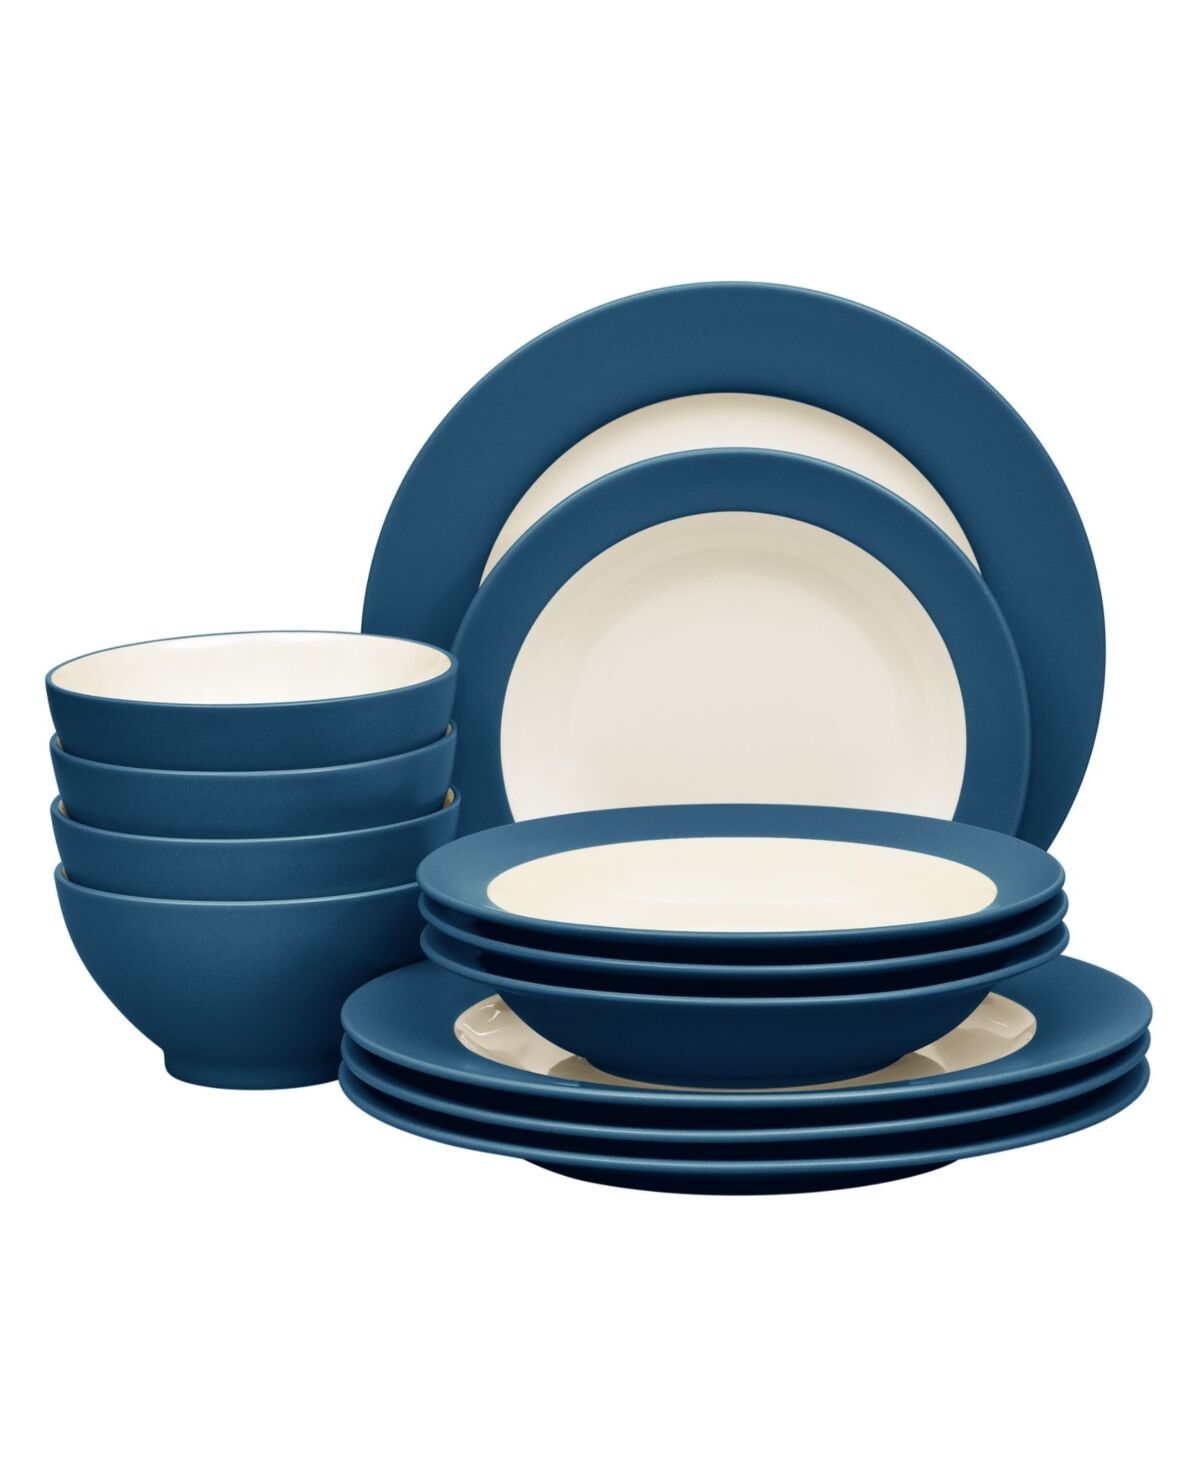 Noritake Colorwave Rim 12-Piece Dinnerware Set, Service for 4, Created for Macy's - Blue